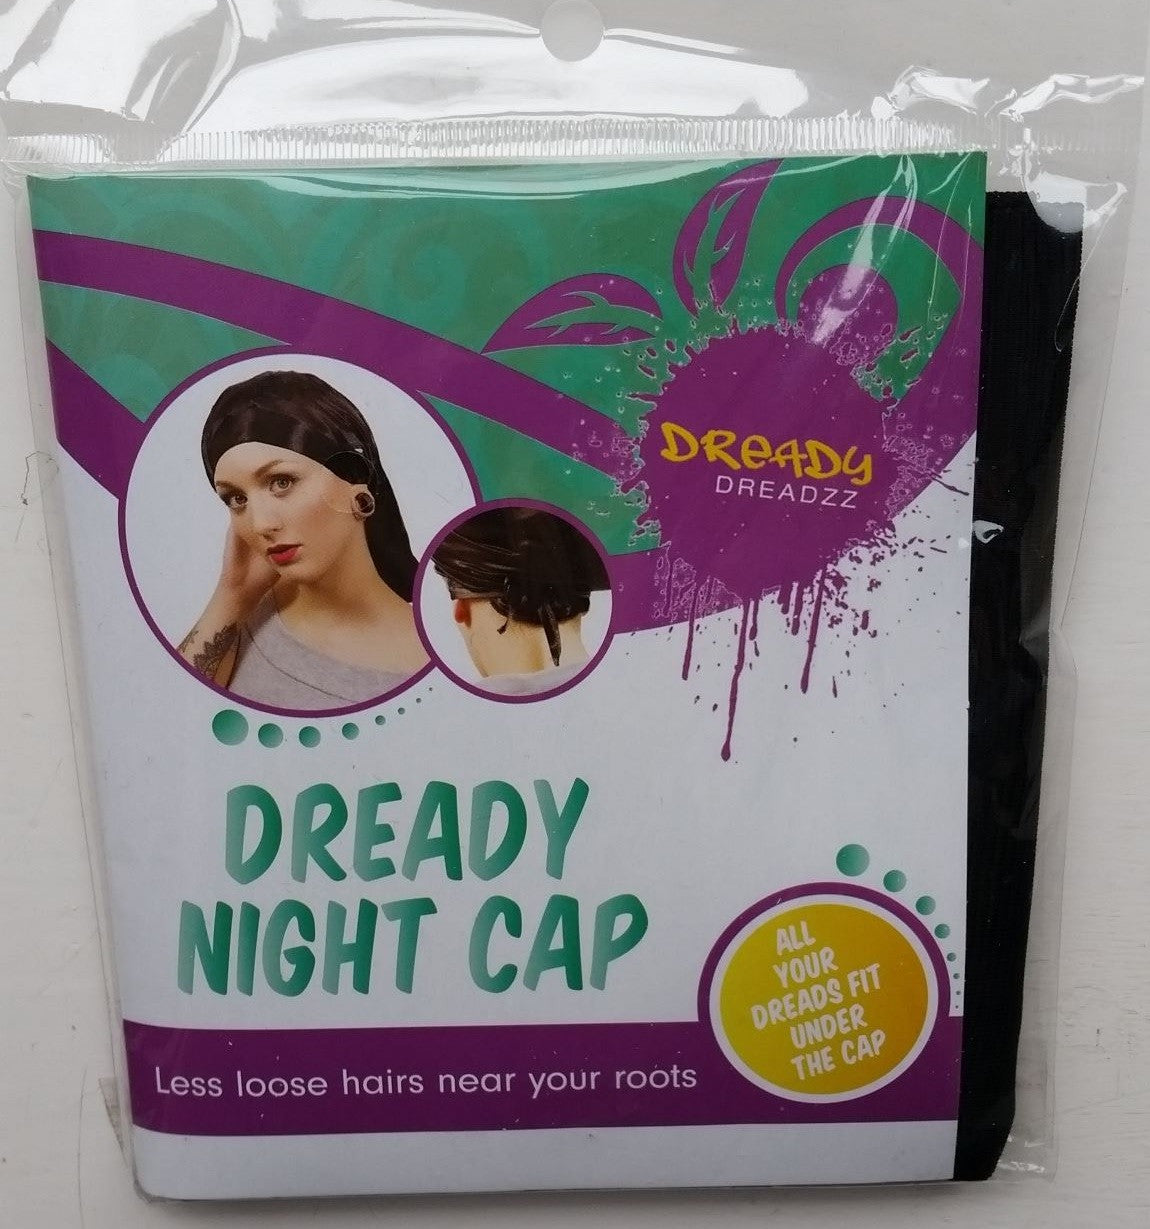 Dready Dreadzz - Dreadlocks Night Cap